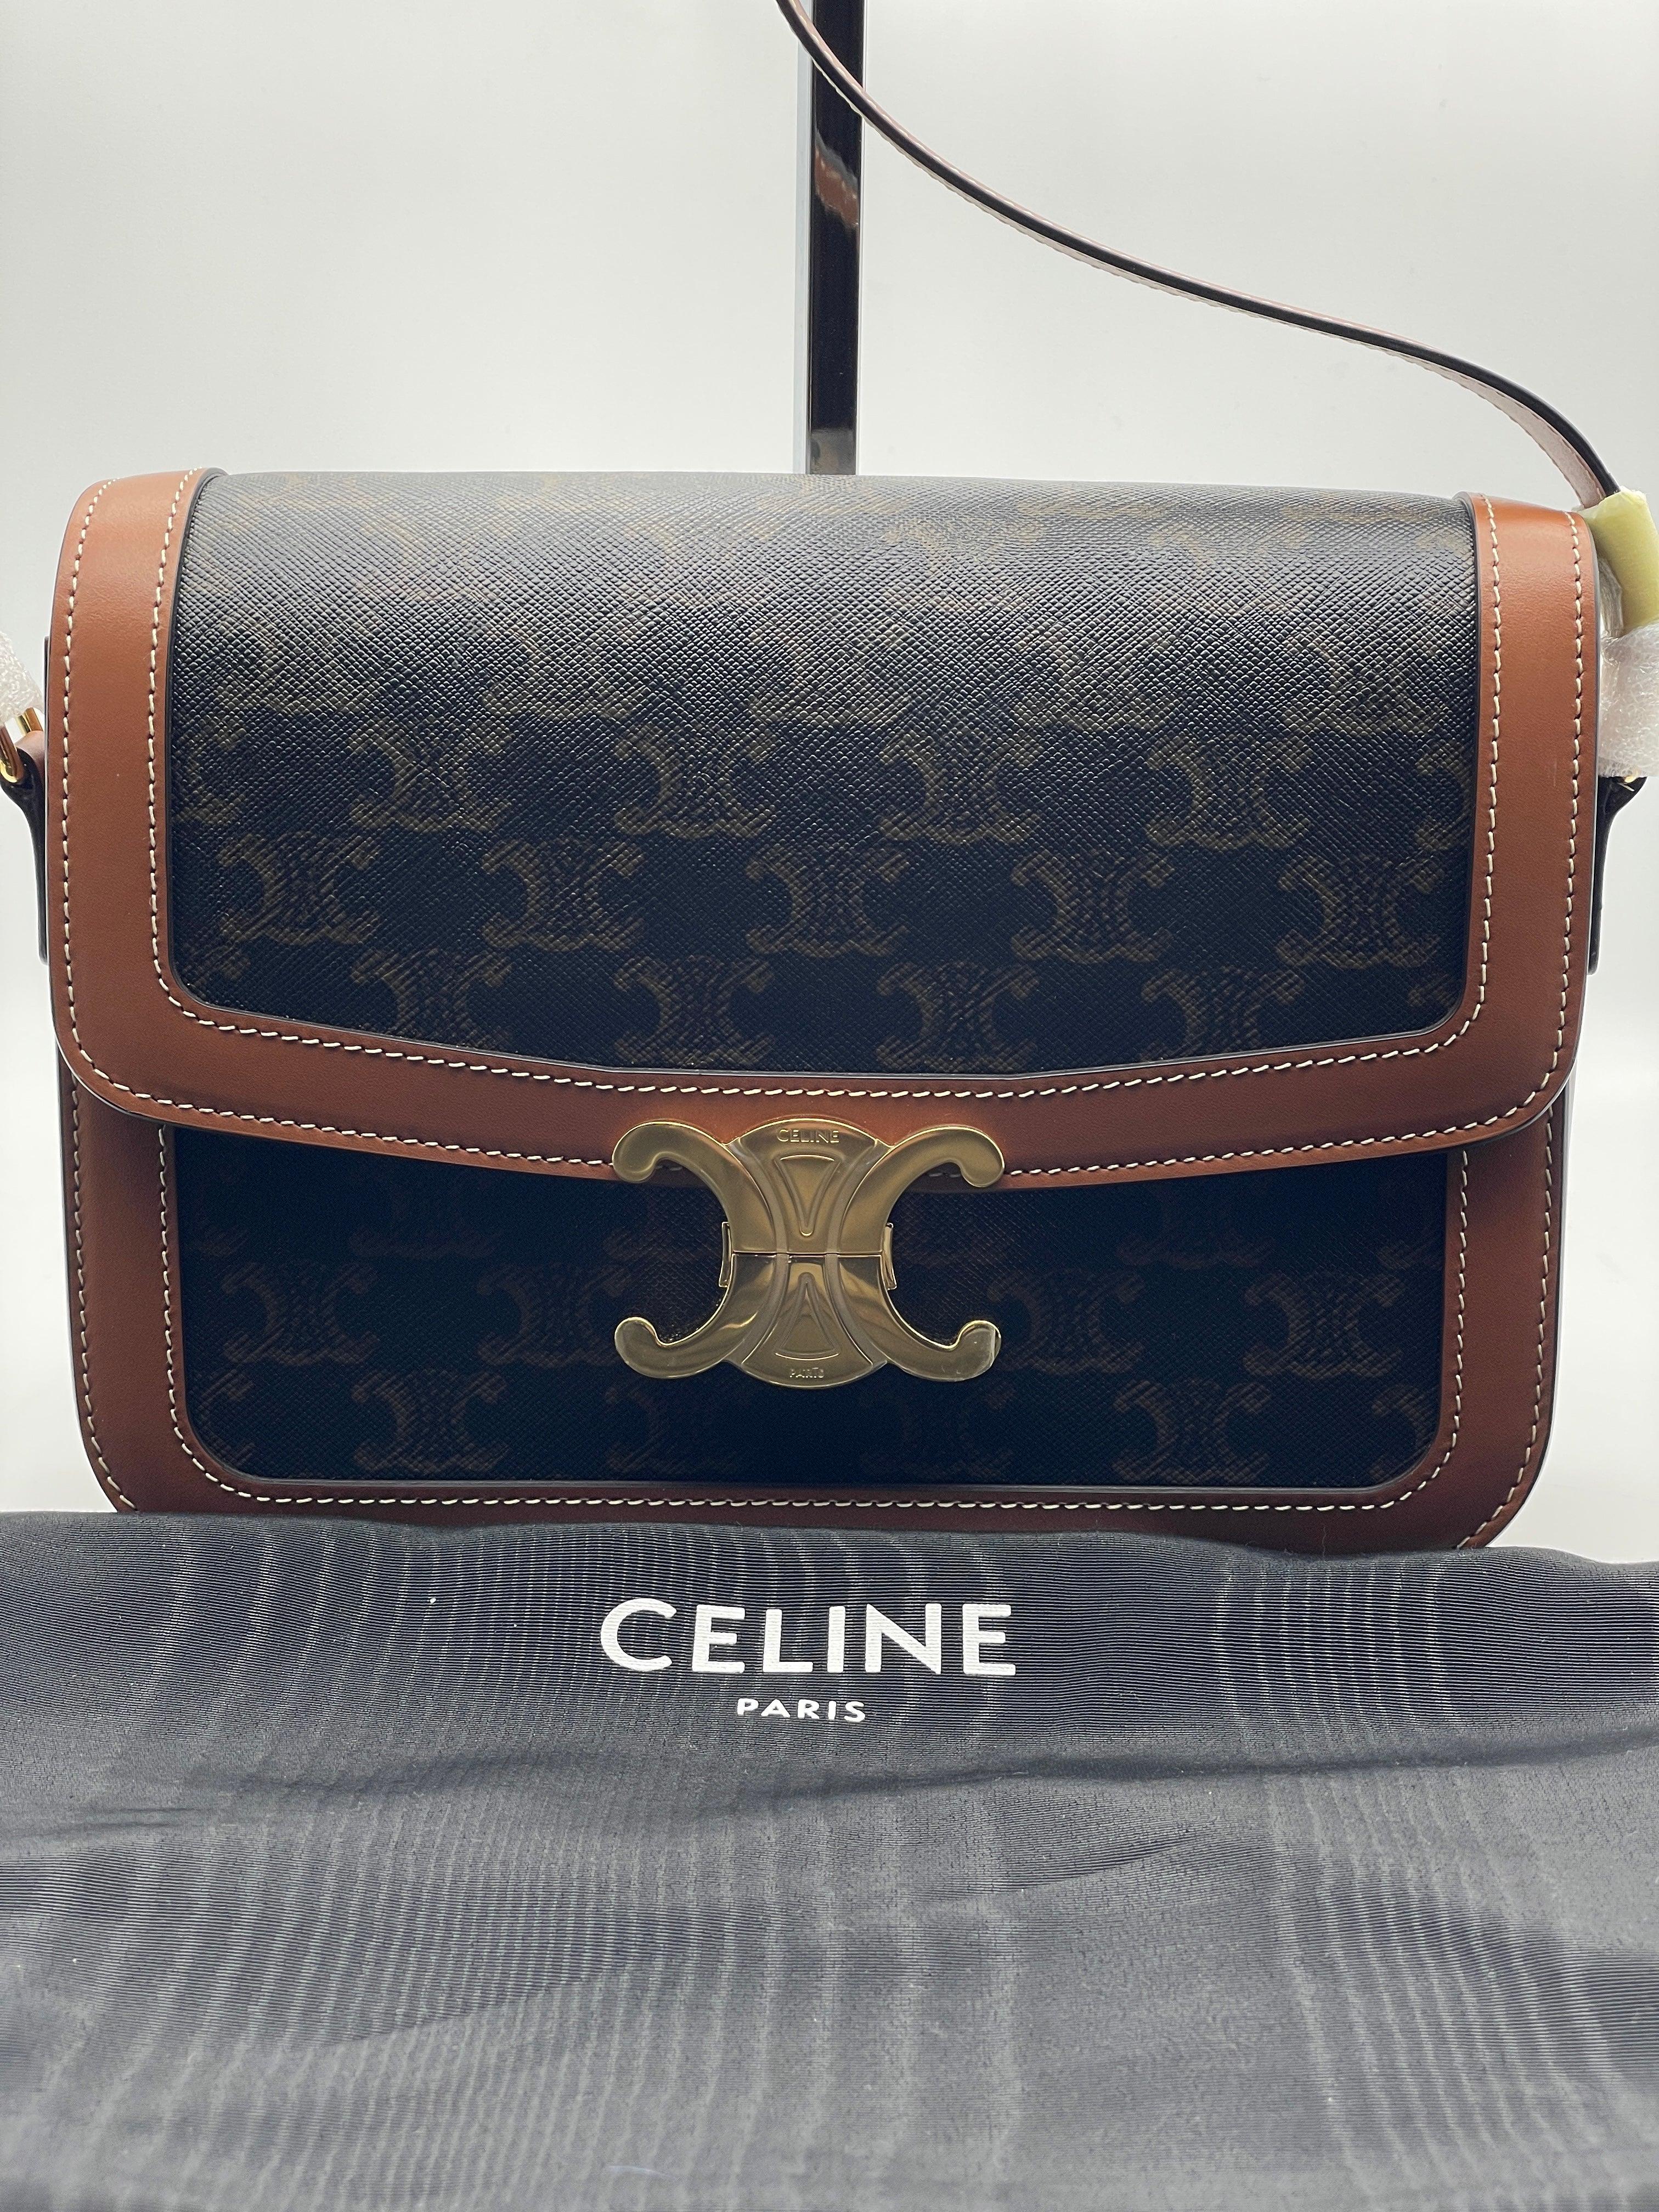 Celine hand bag : citycitycity_global